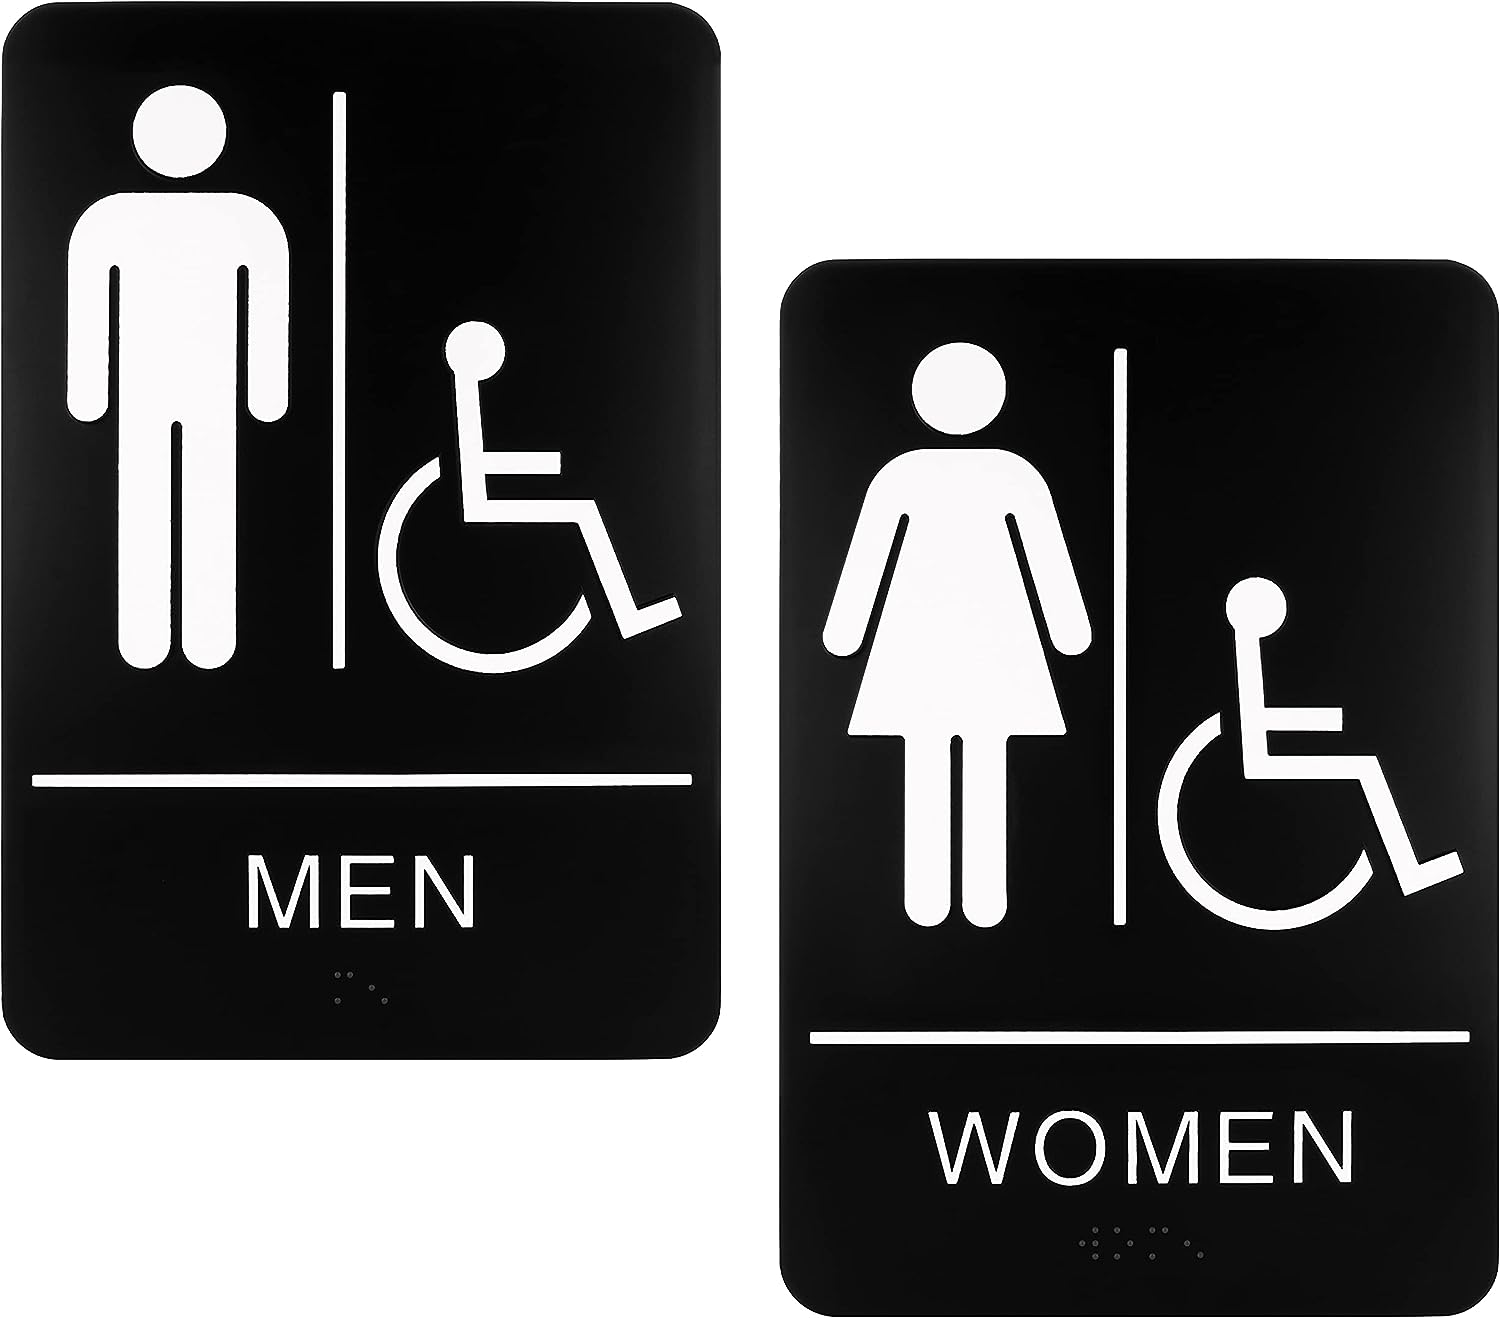 Washroom signs